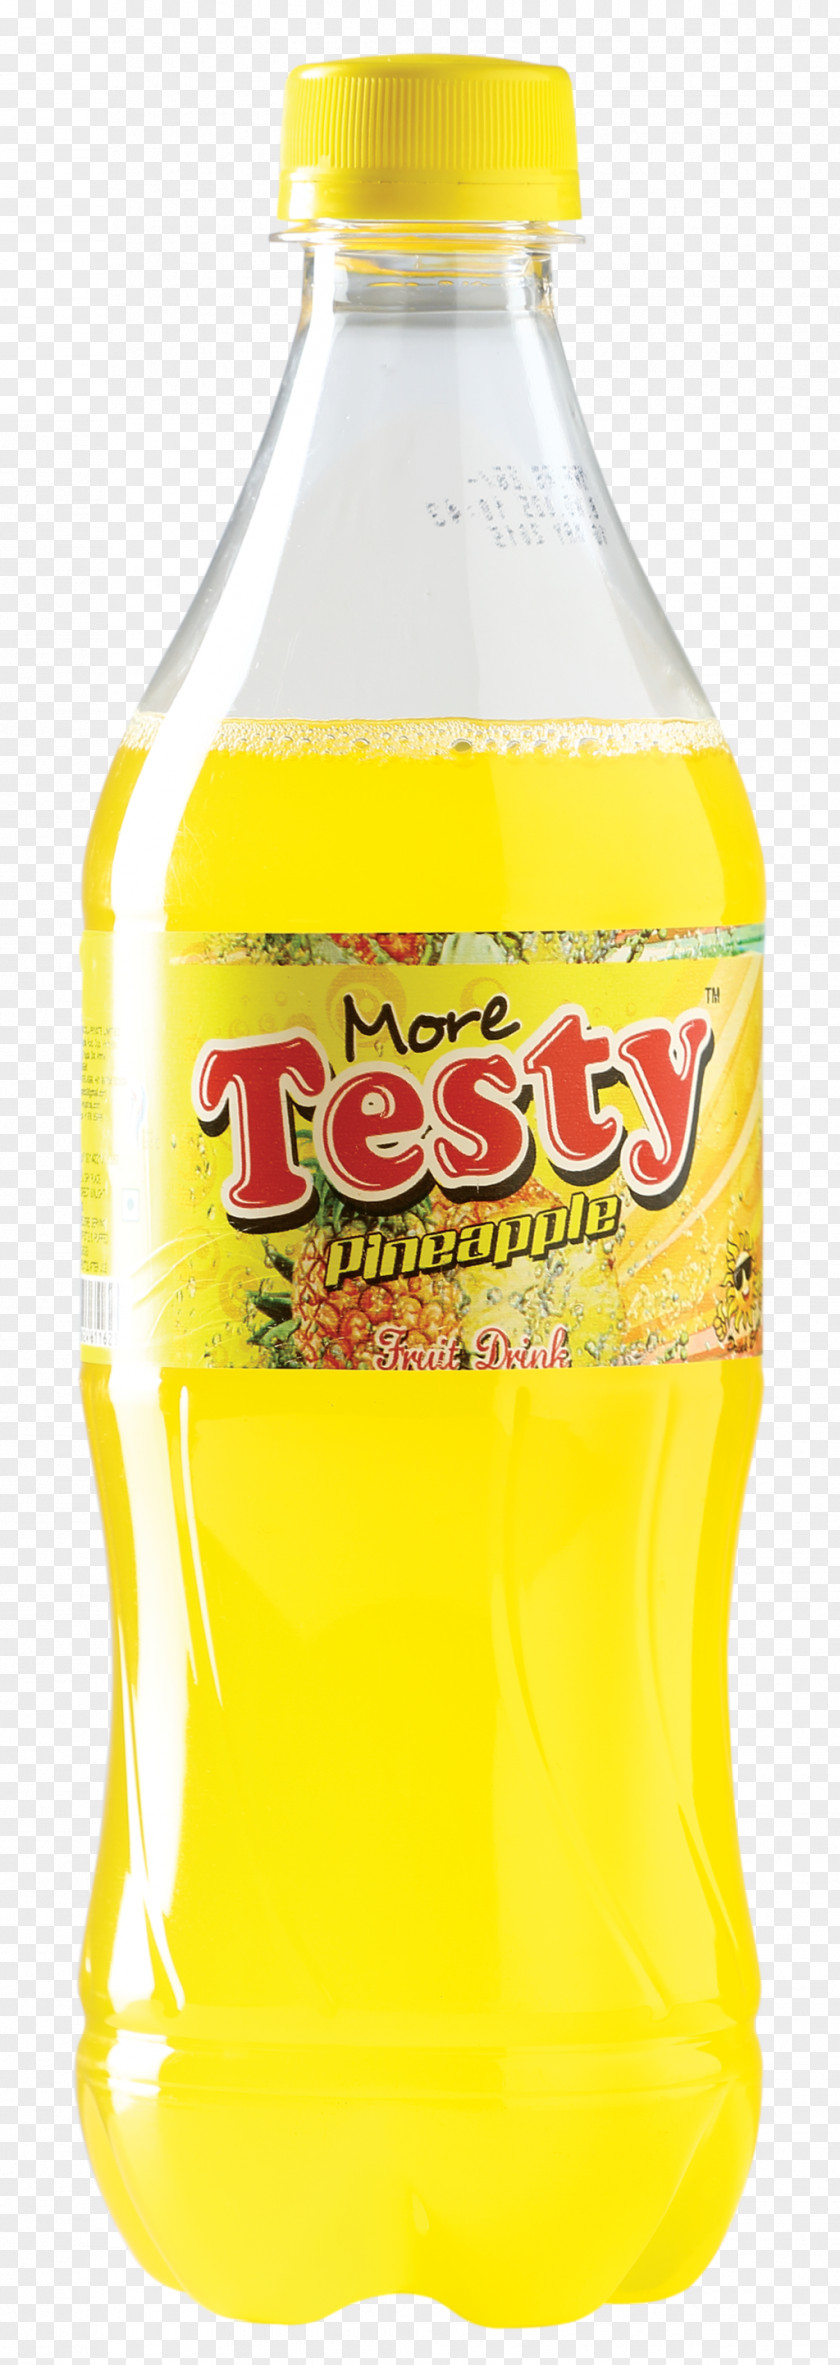 Juice Fizzy Drinks NEW GUJARAT COLA PVT LTD Bottle PNG